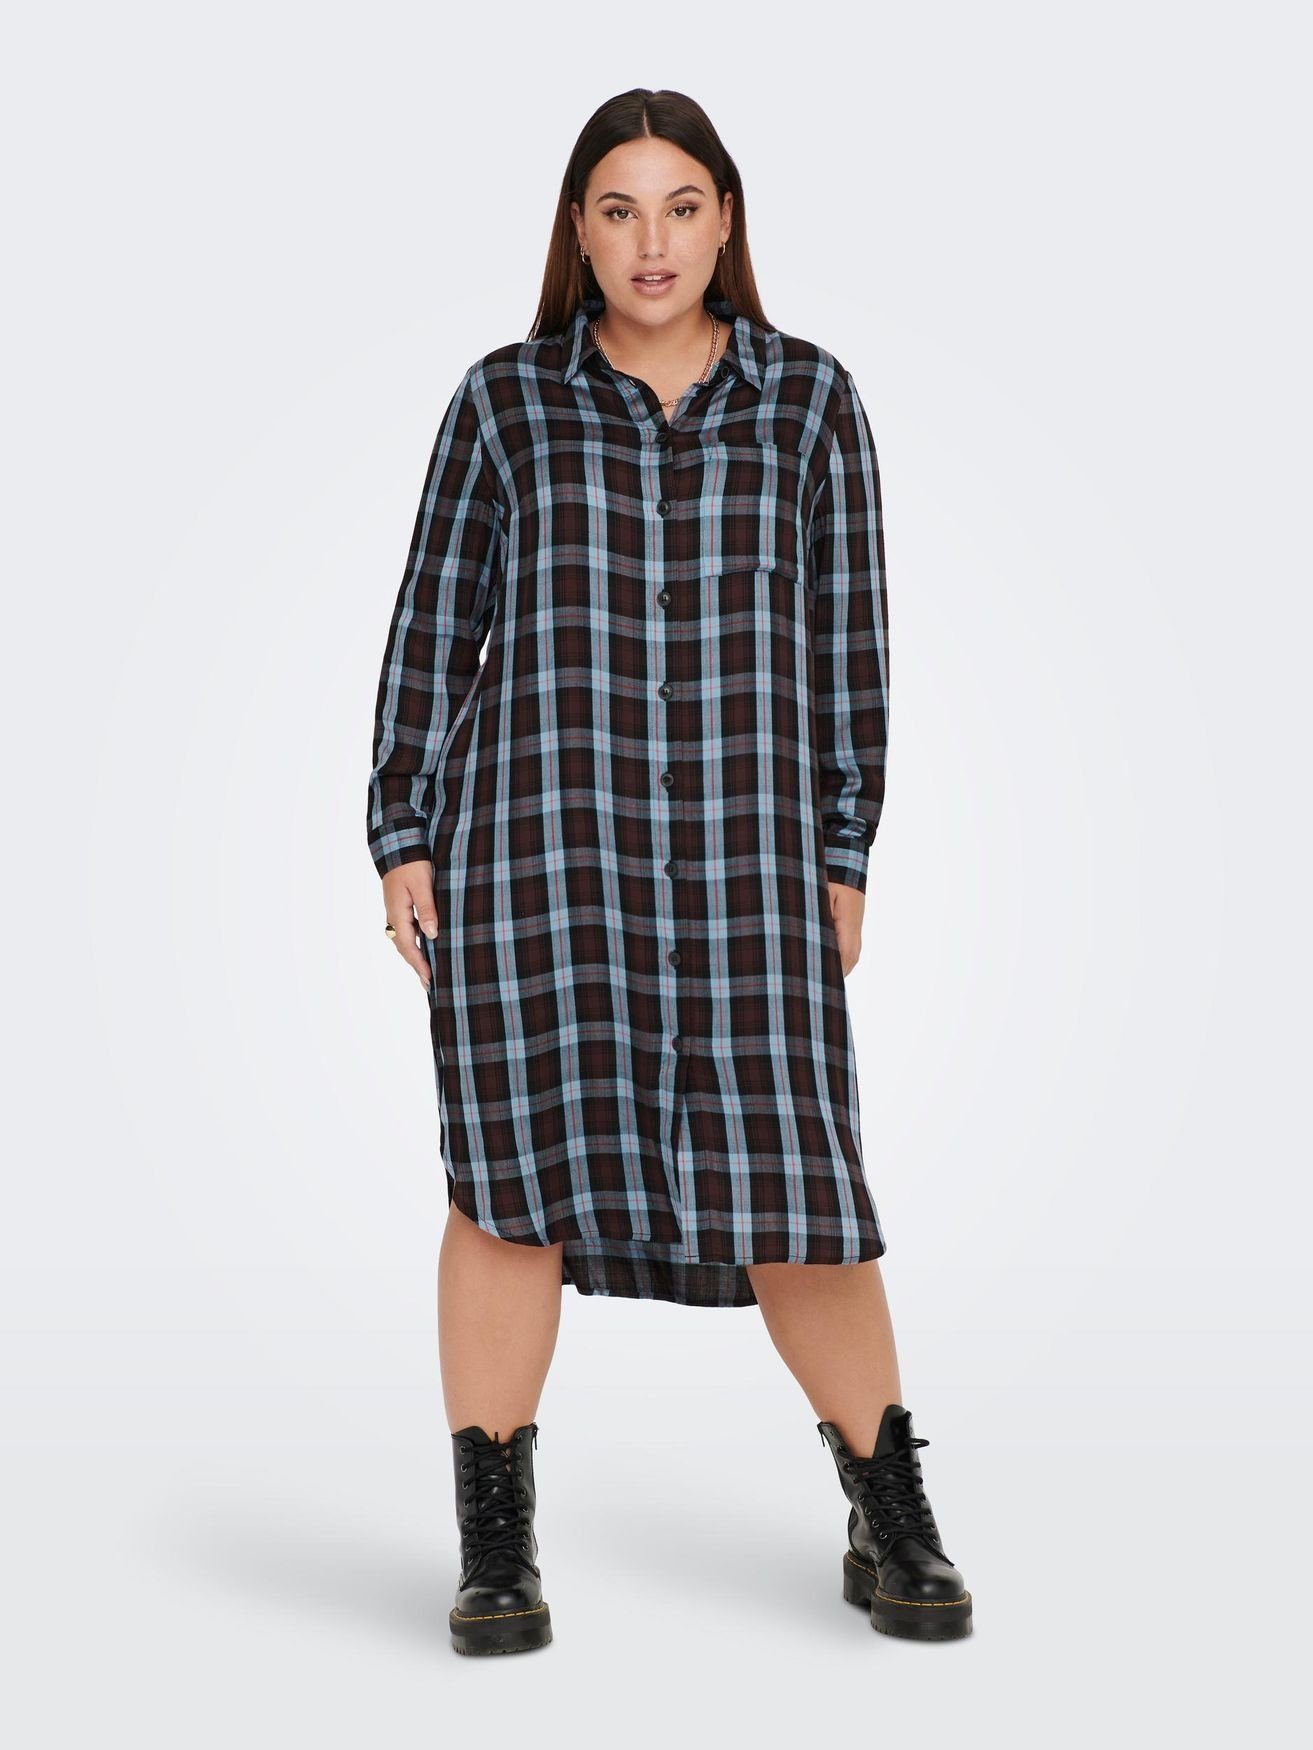 Size Holzfäller ONLY Übergröße 4571 Shirtkleid in Kleid CARMAKOMA Schwarz-Blau Kariertes Midi (lang) Plus Design